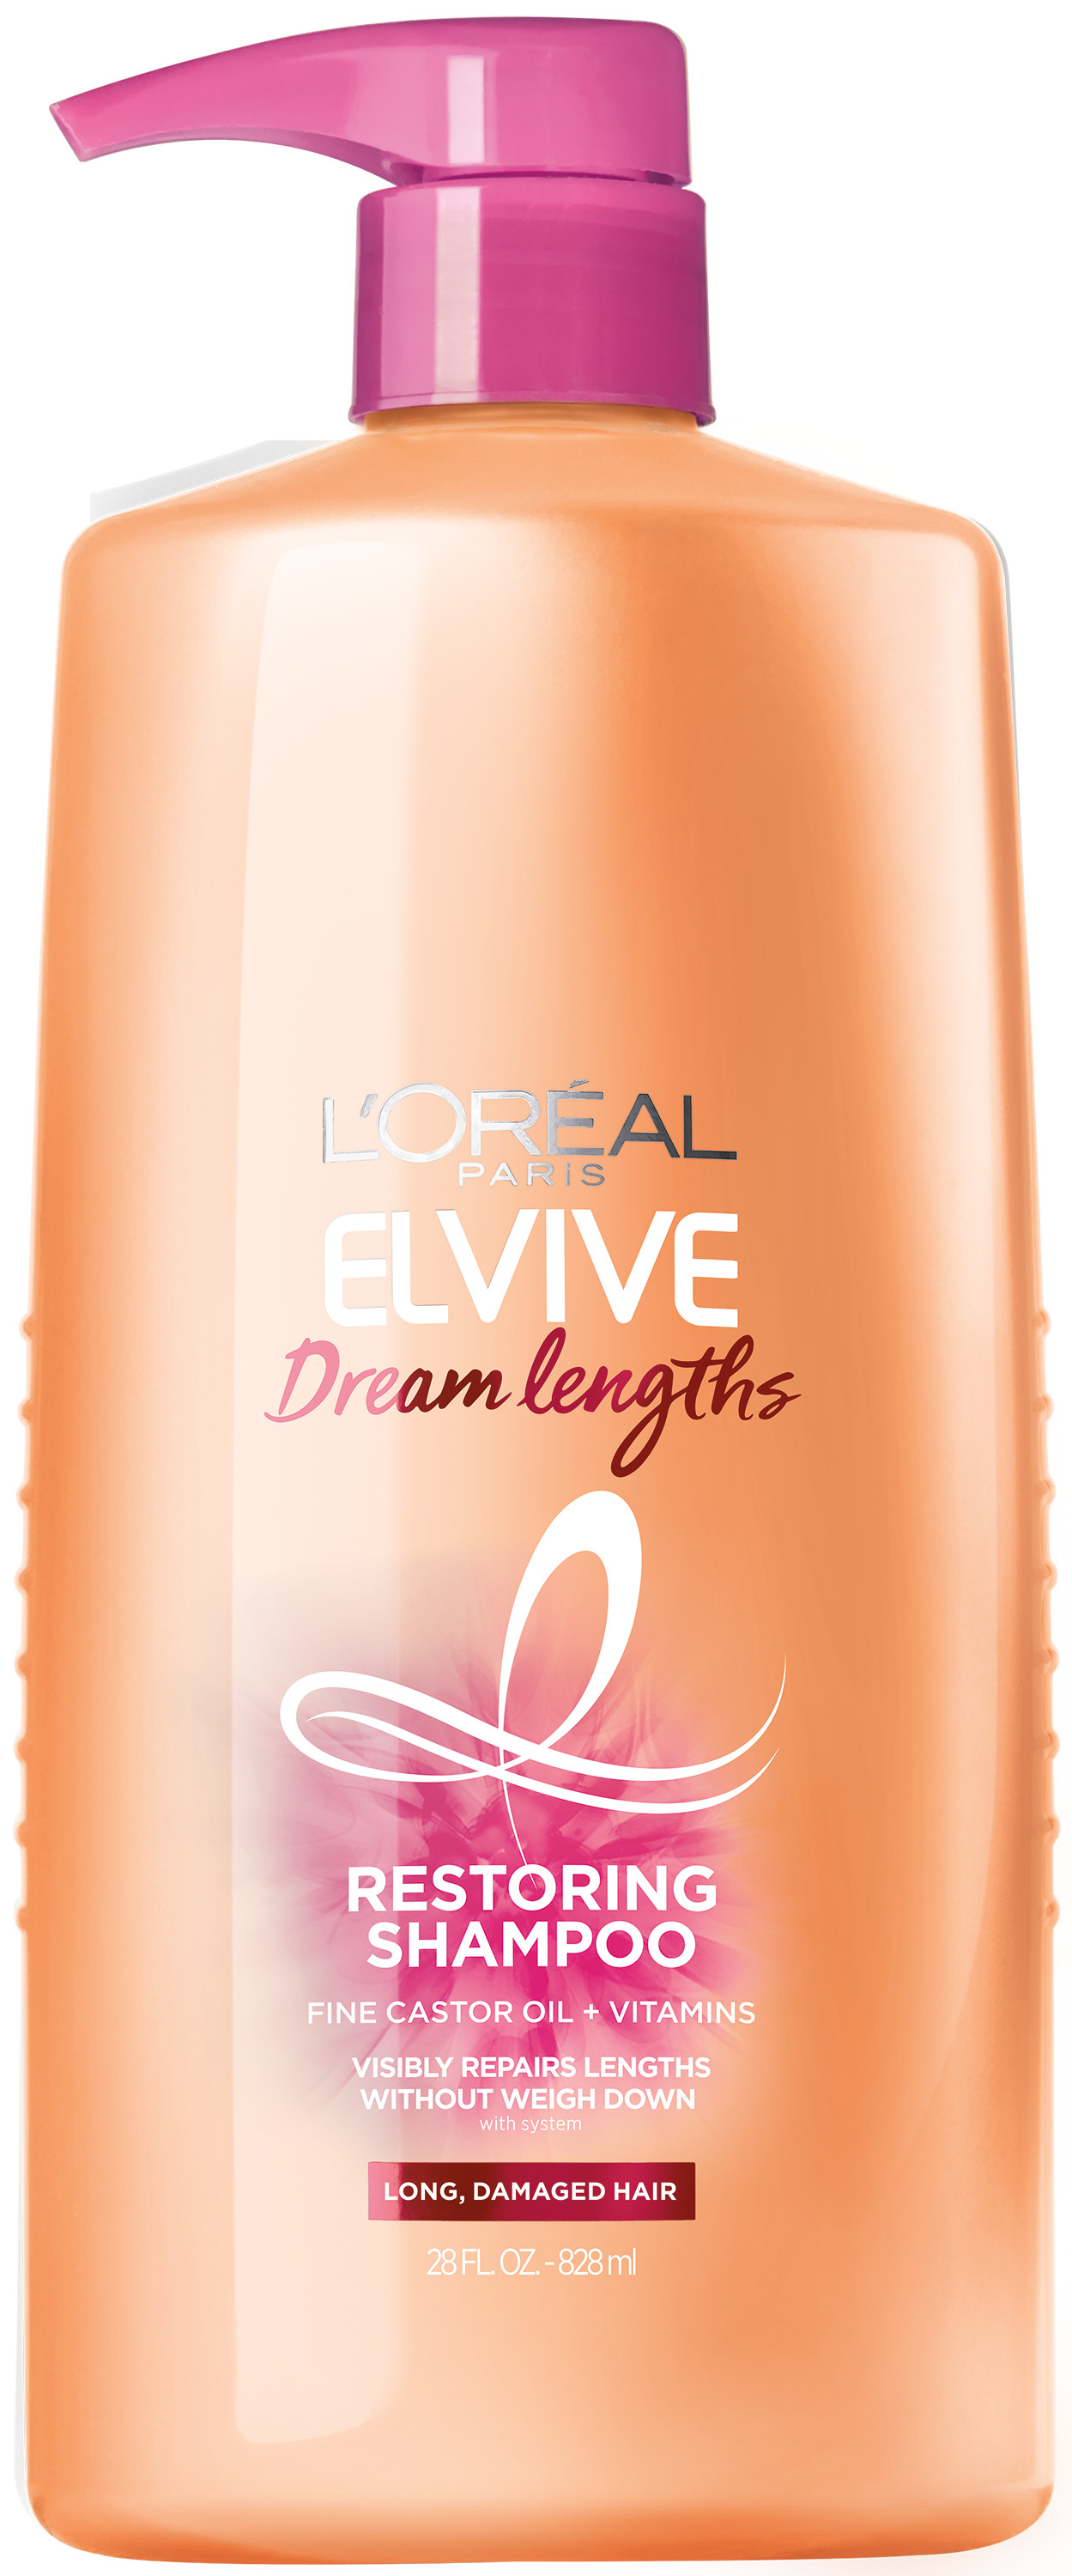 L'Oreal Paris Elvive Dream Lengths Restoring Shampoo, 28 fl oz - image 1 of 8